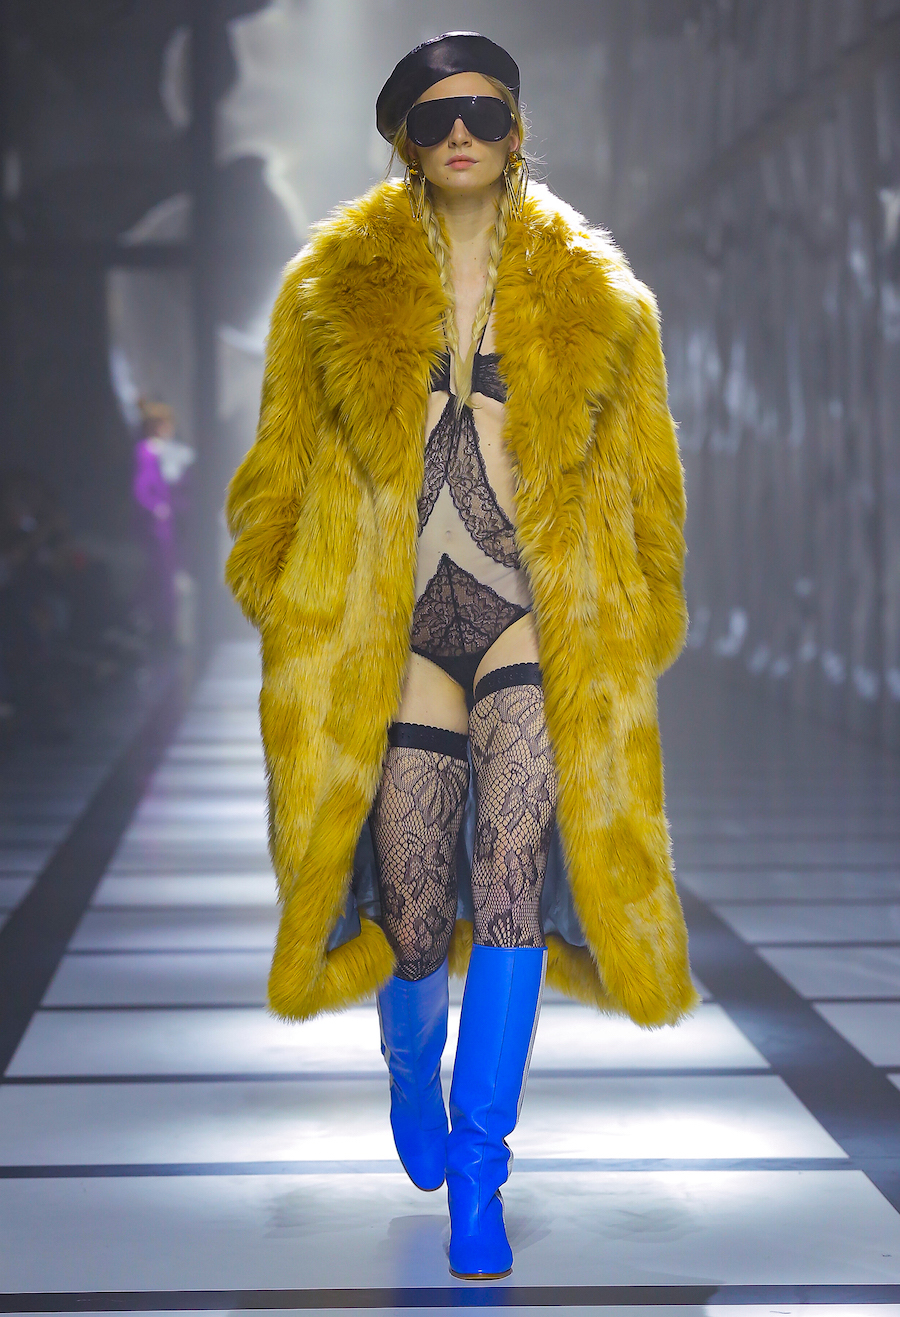 Gucci 'Exquisite' fall winter 2022